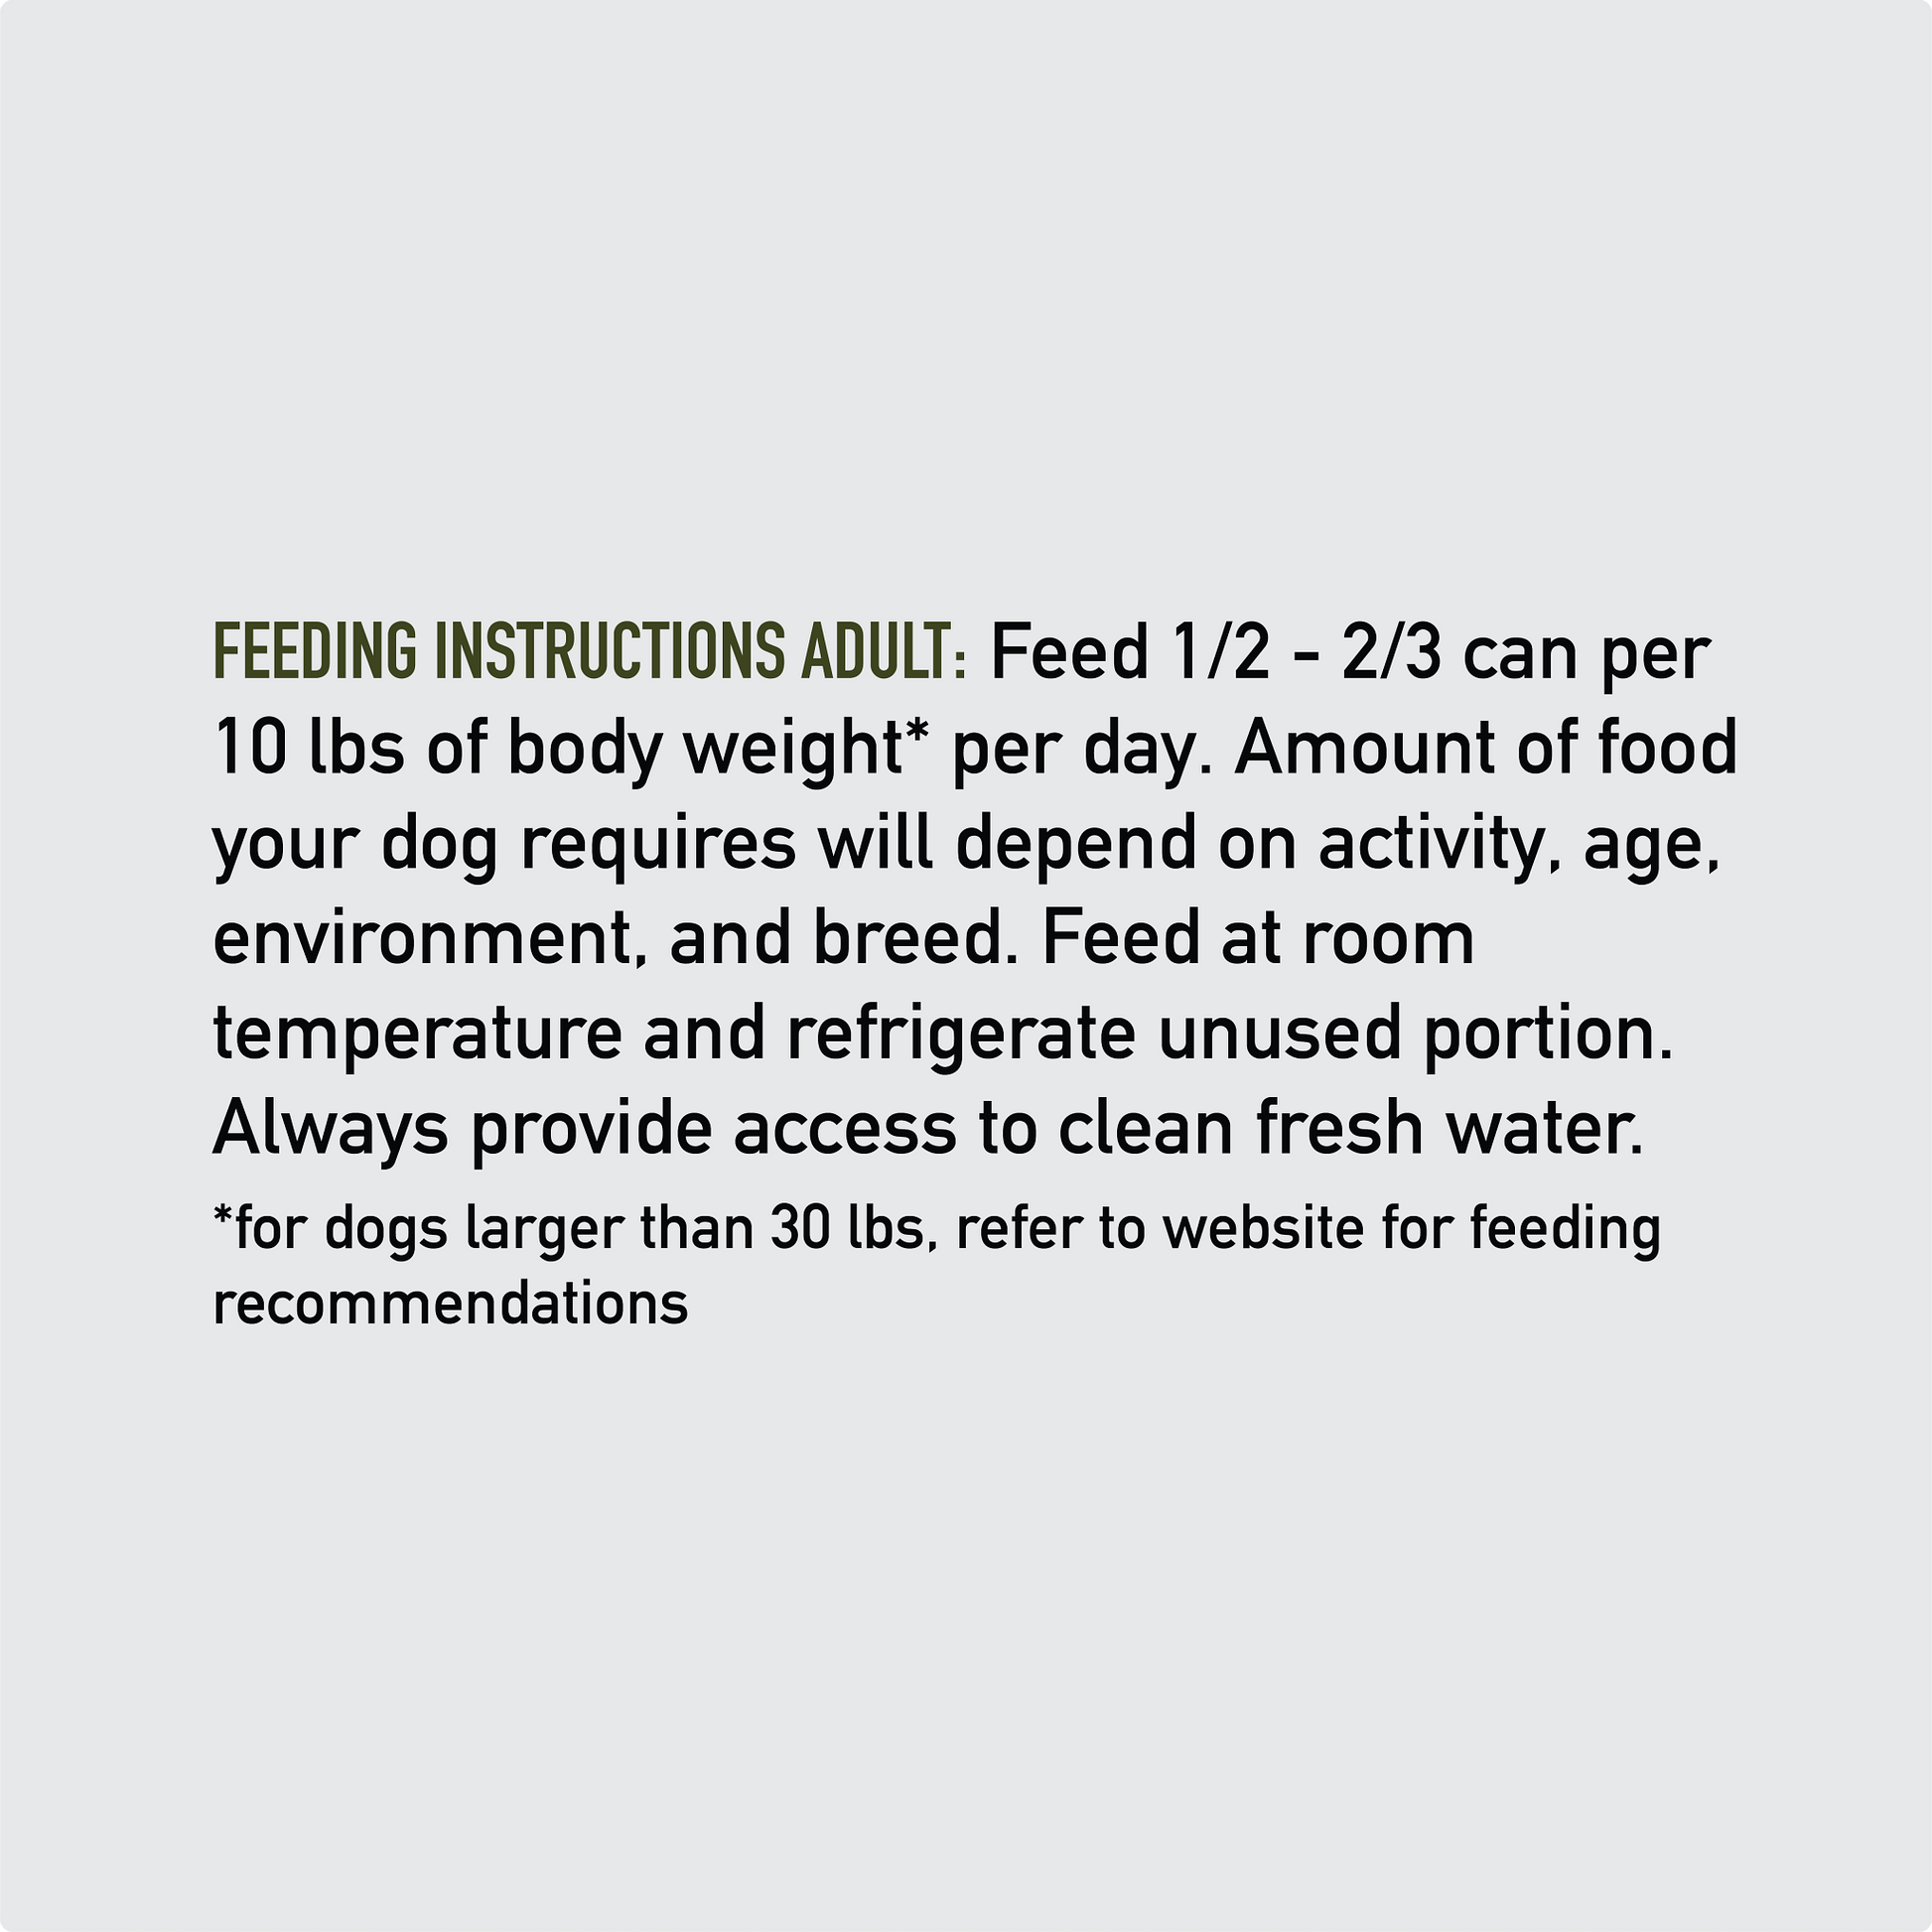 Orijen Wet Dog Tundra Stew Recipe  Canned Dog Food  | PetMax Canada